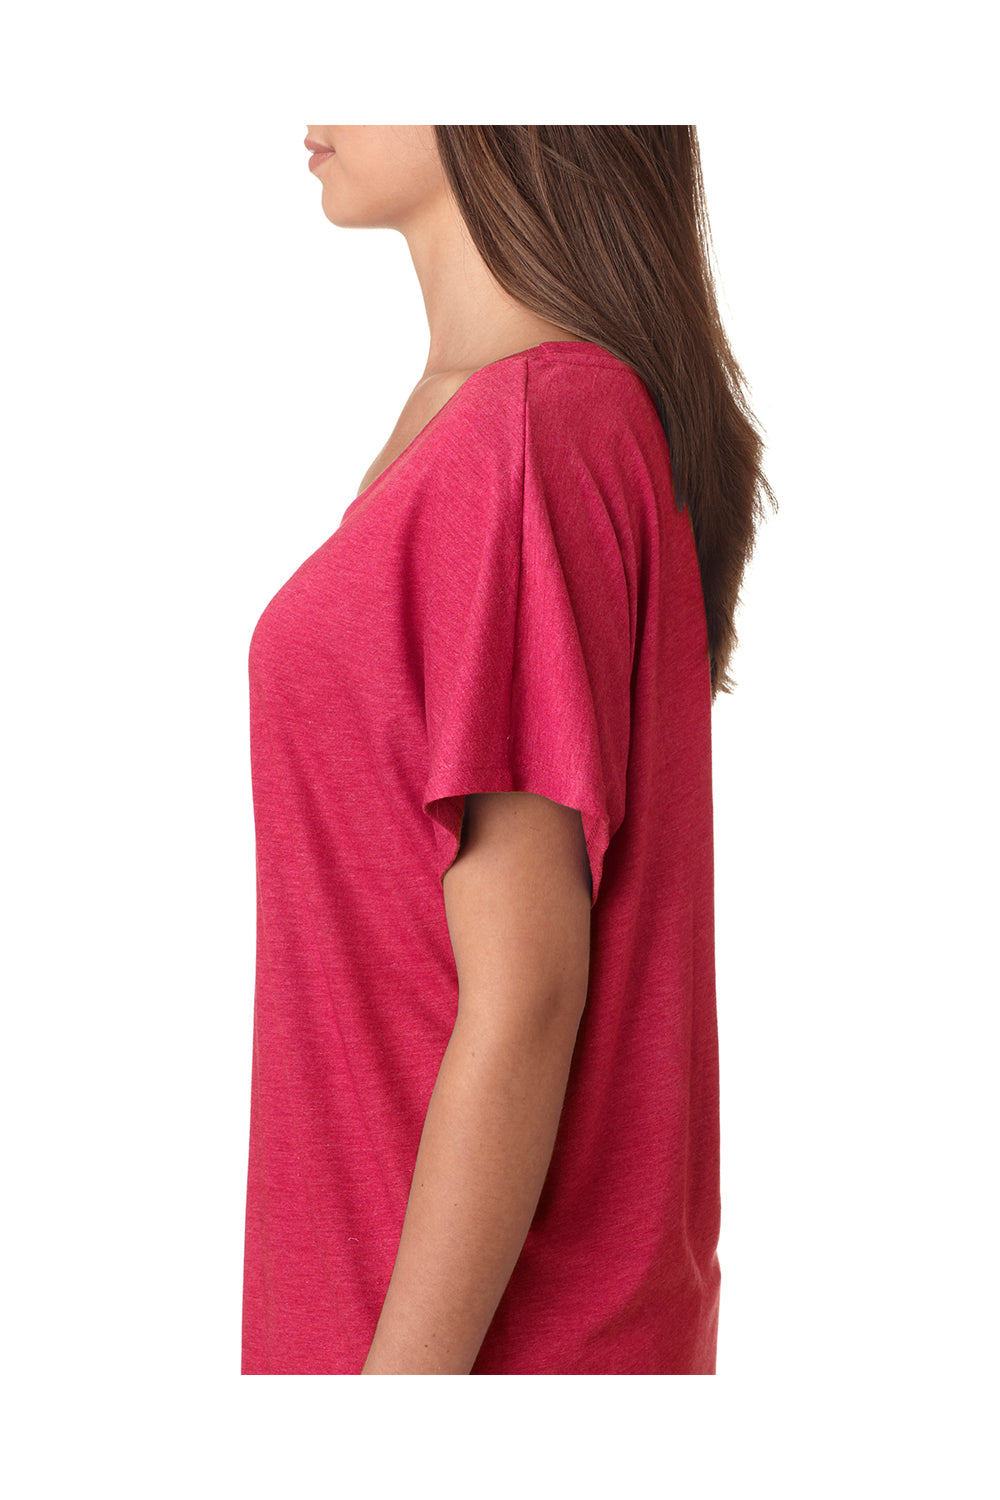 Next Level 6760 Womens Dolman Jersey Short Sleeve Scoop Neck T-Shirt Shocking Pink Side